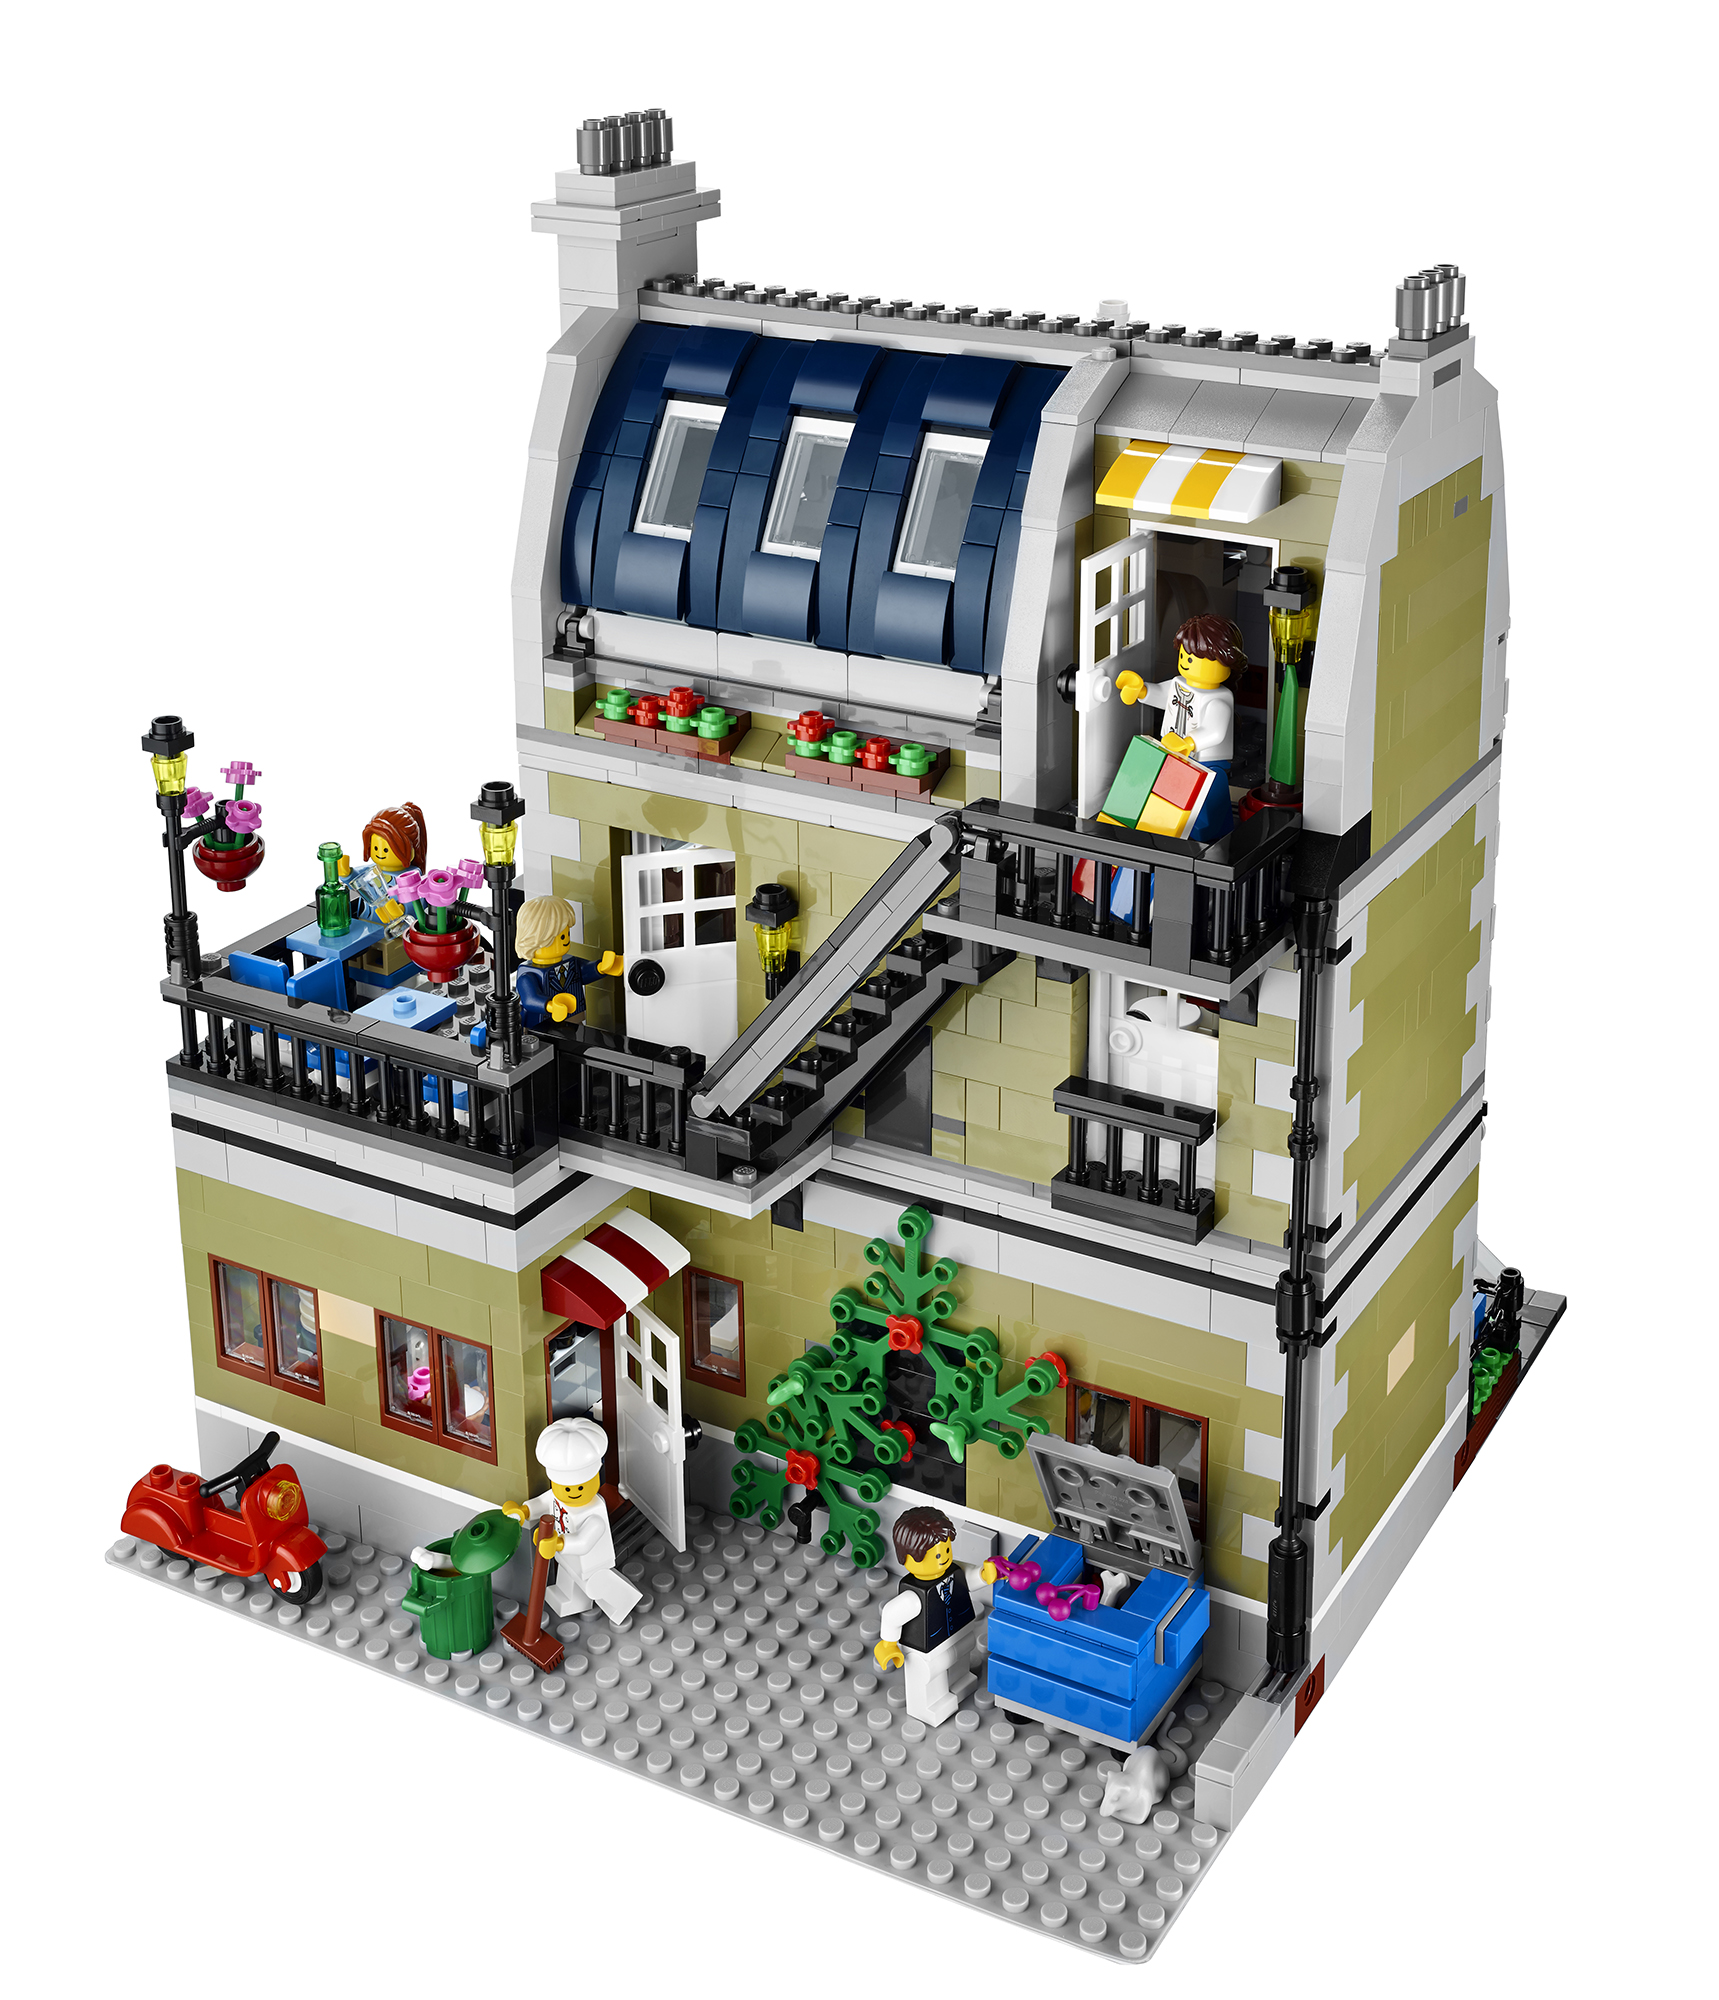 2014 LEGO Parisian Restaurant 10243 Modular Building Photo Preview! - Bricks and Bloks